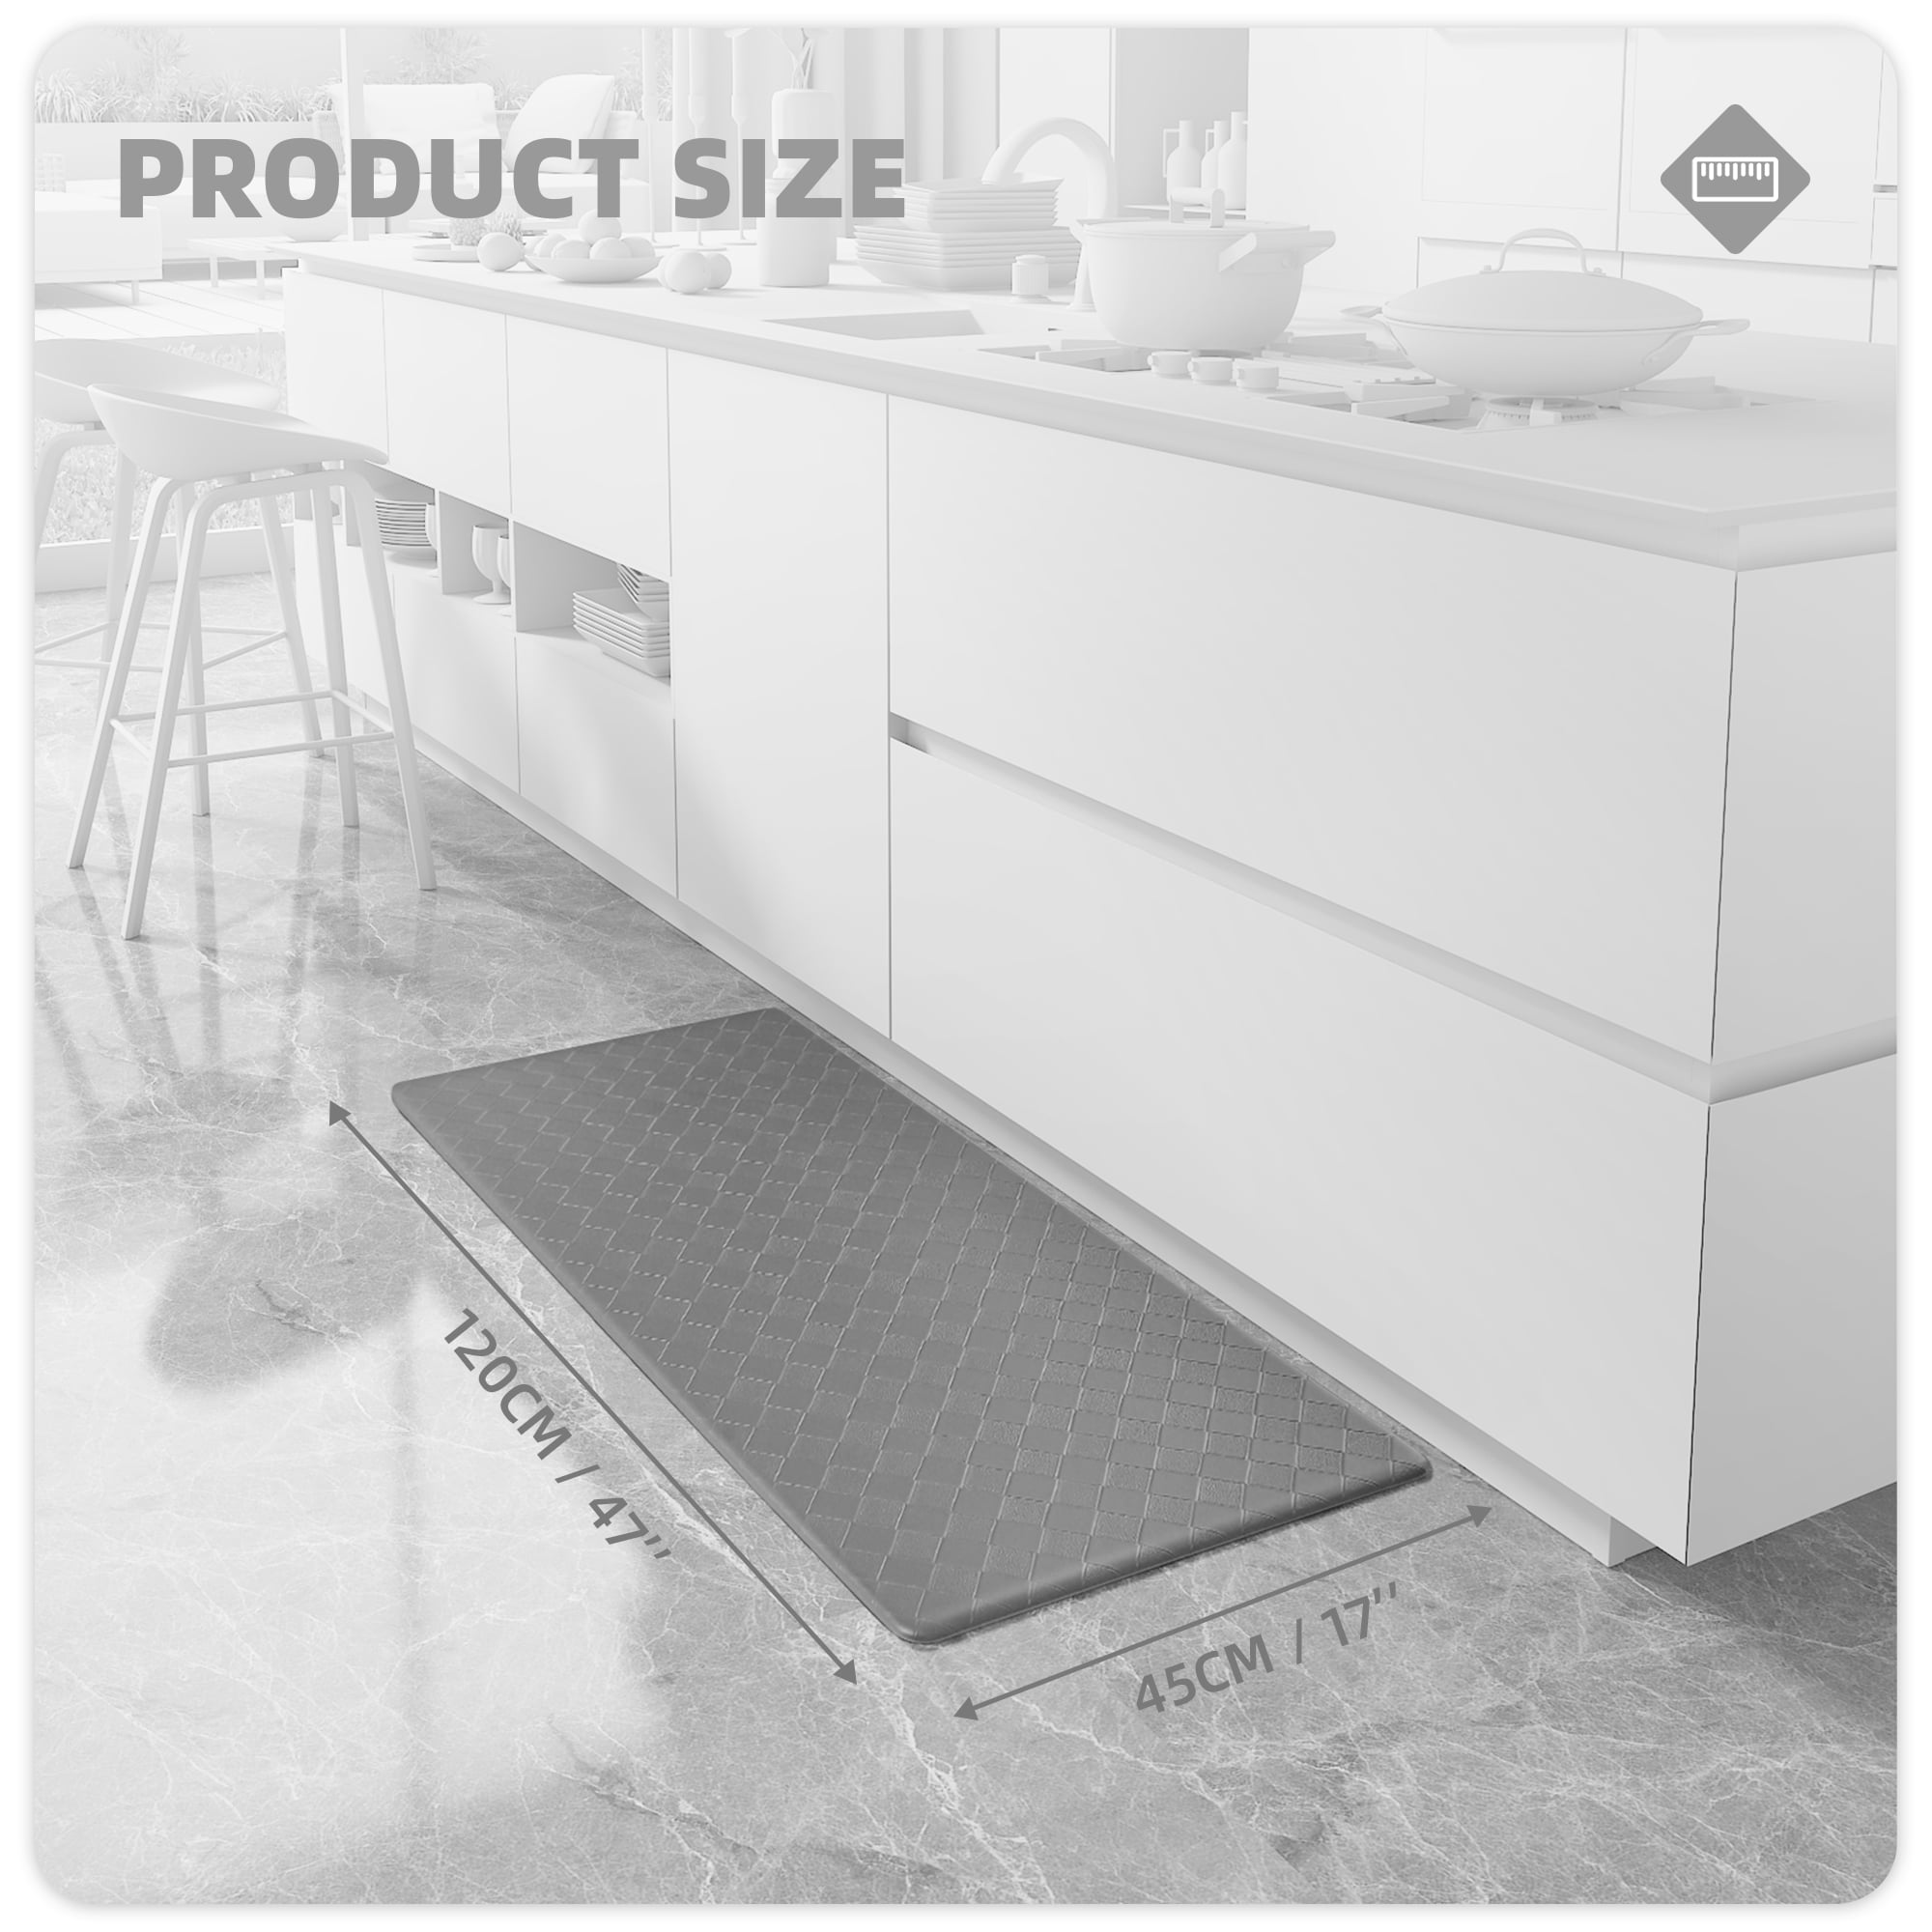 Kitchen Mat, WeGuard 16×24 Anti Fatigue Floor Mat, Waterproof Kitchen Rugs  and Non-Slip Memory Foam Padded Comfort Standing Mat for Kitchen, Home,  Office, Laundry, (Grey) 